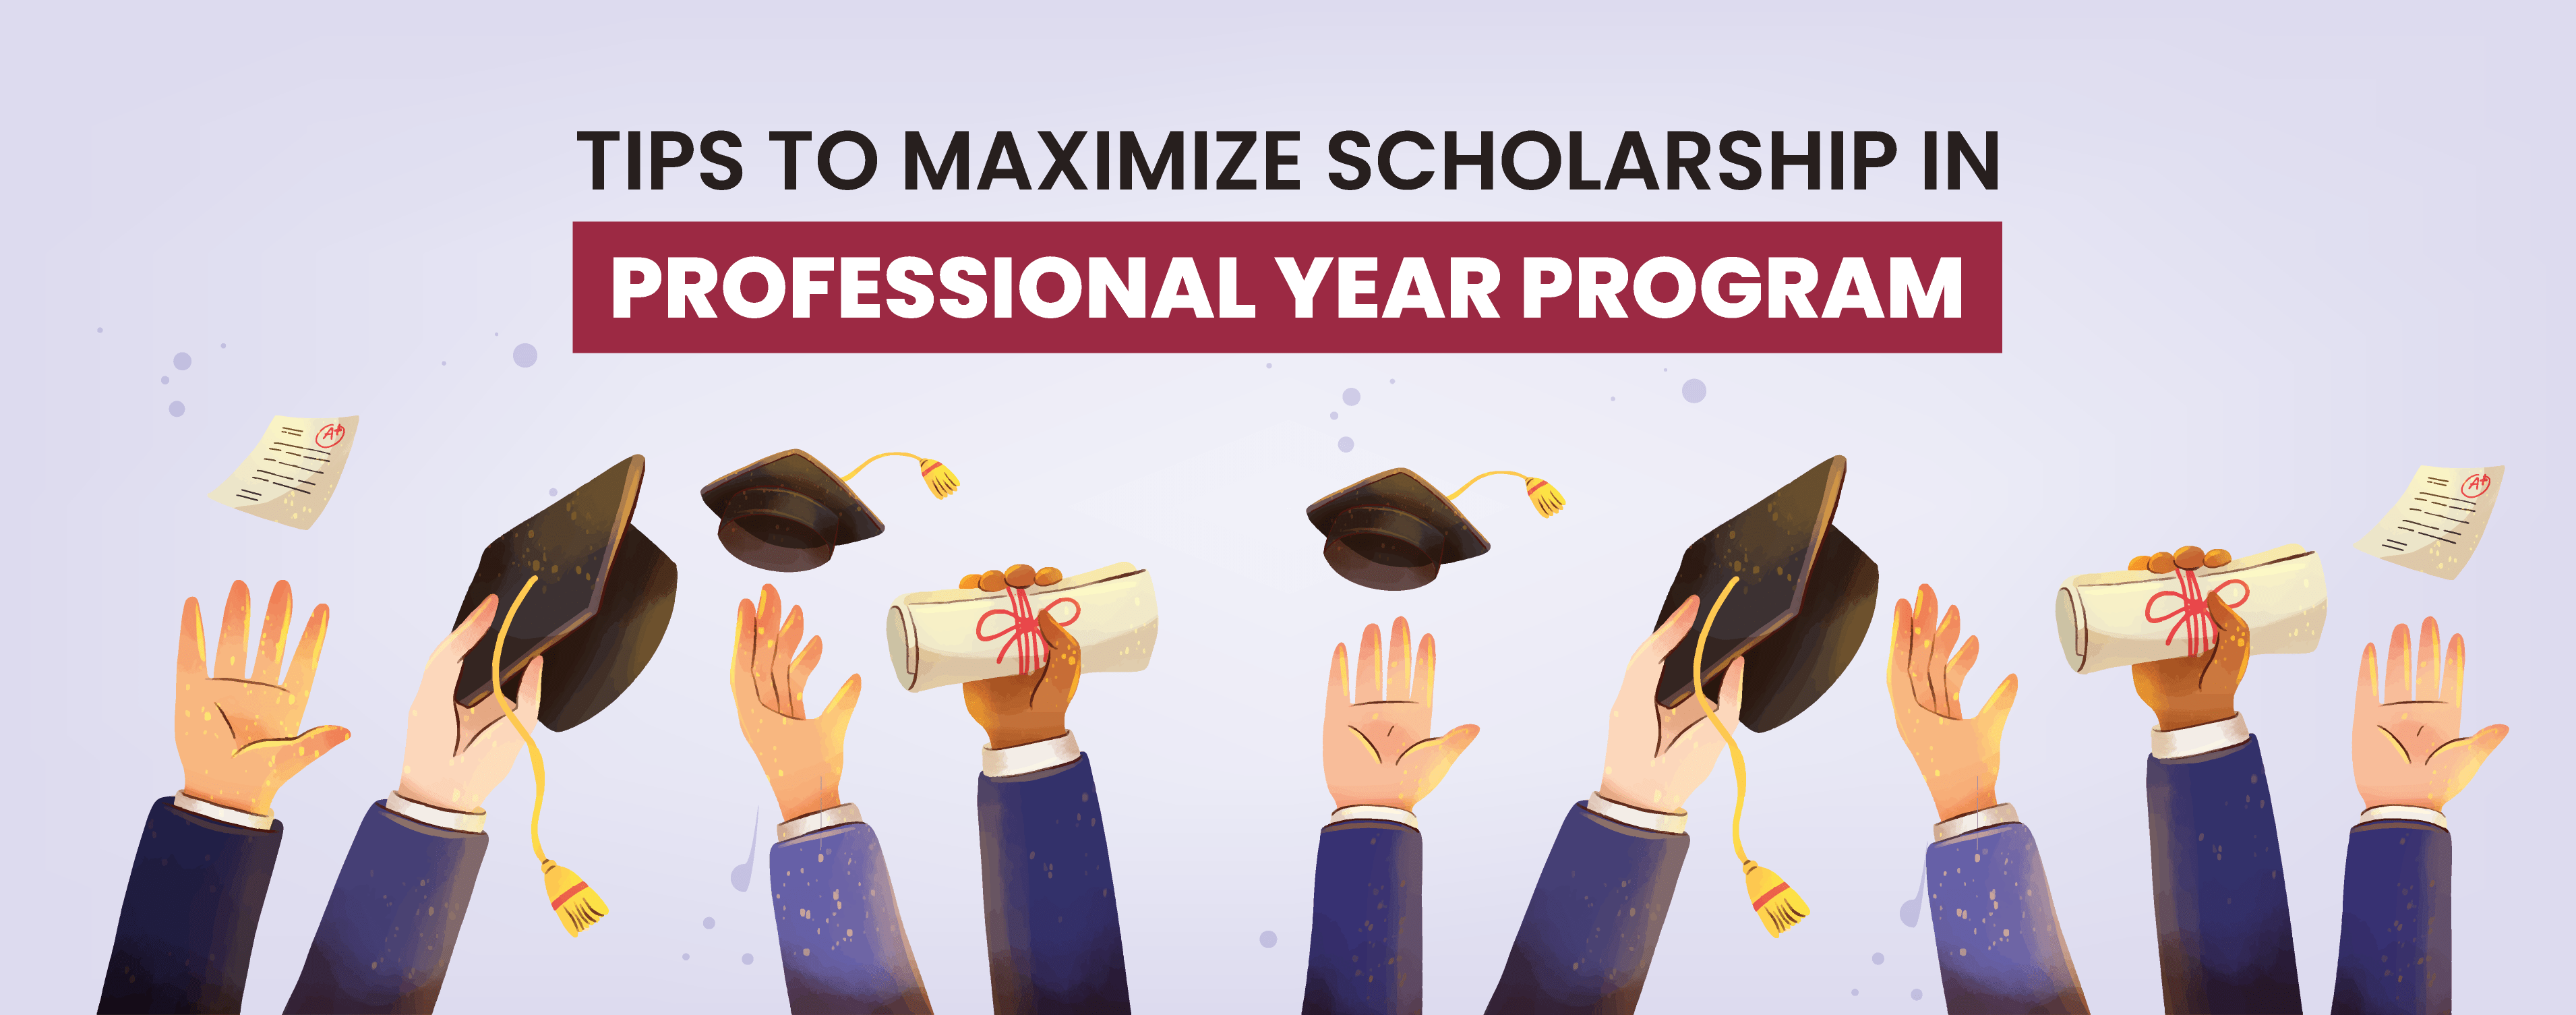 Professional Year Program scholarship